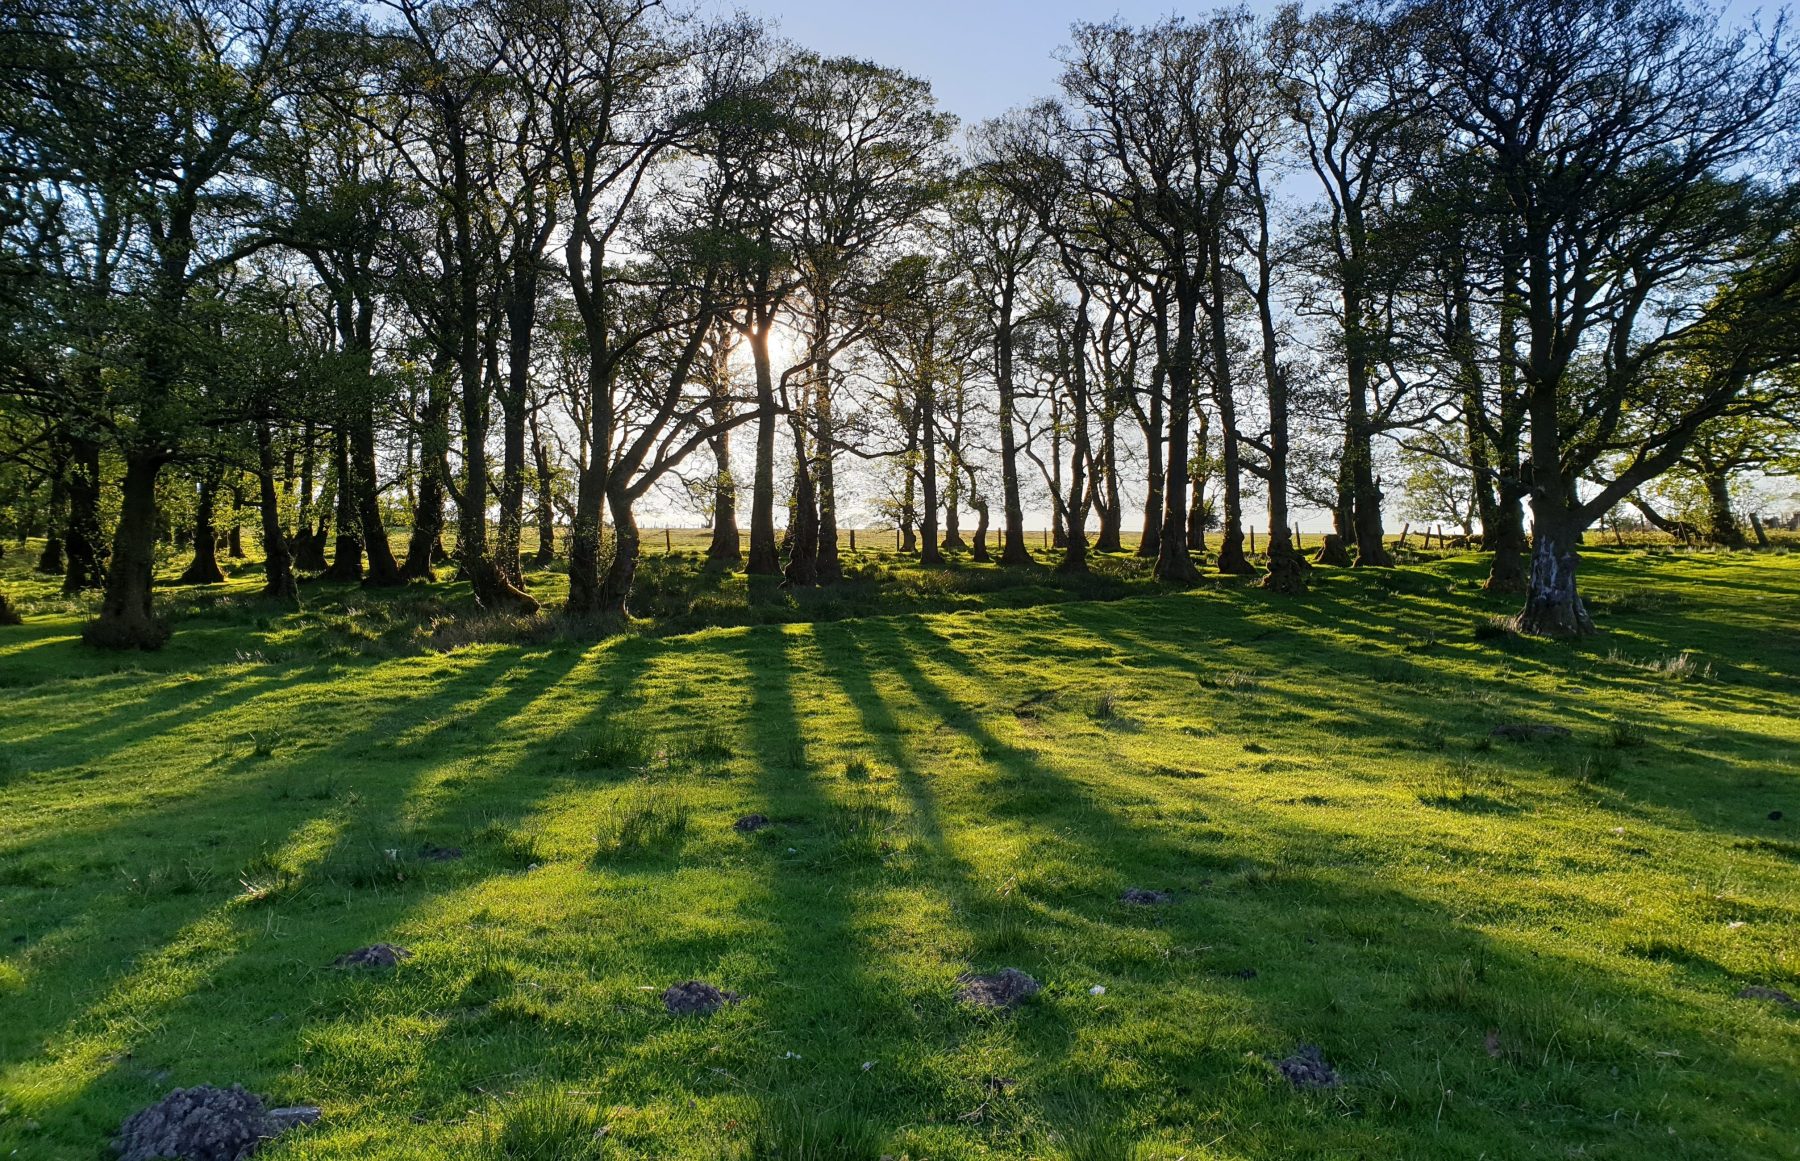 Sun through trees at Brecon. Credit: James Wallace